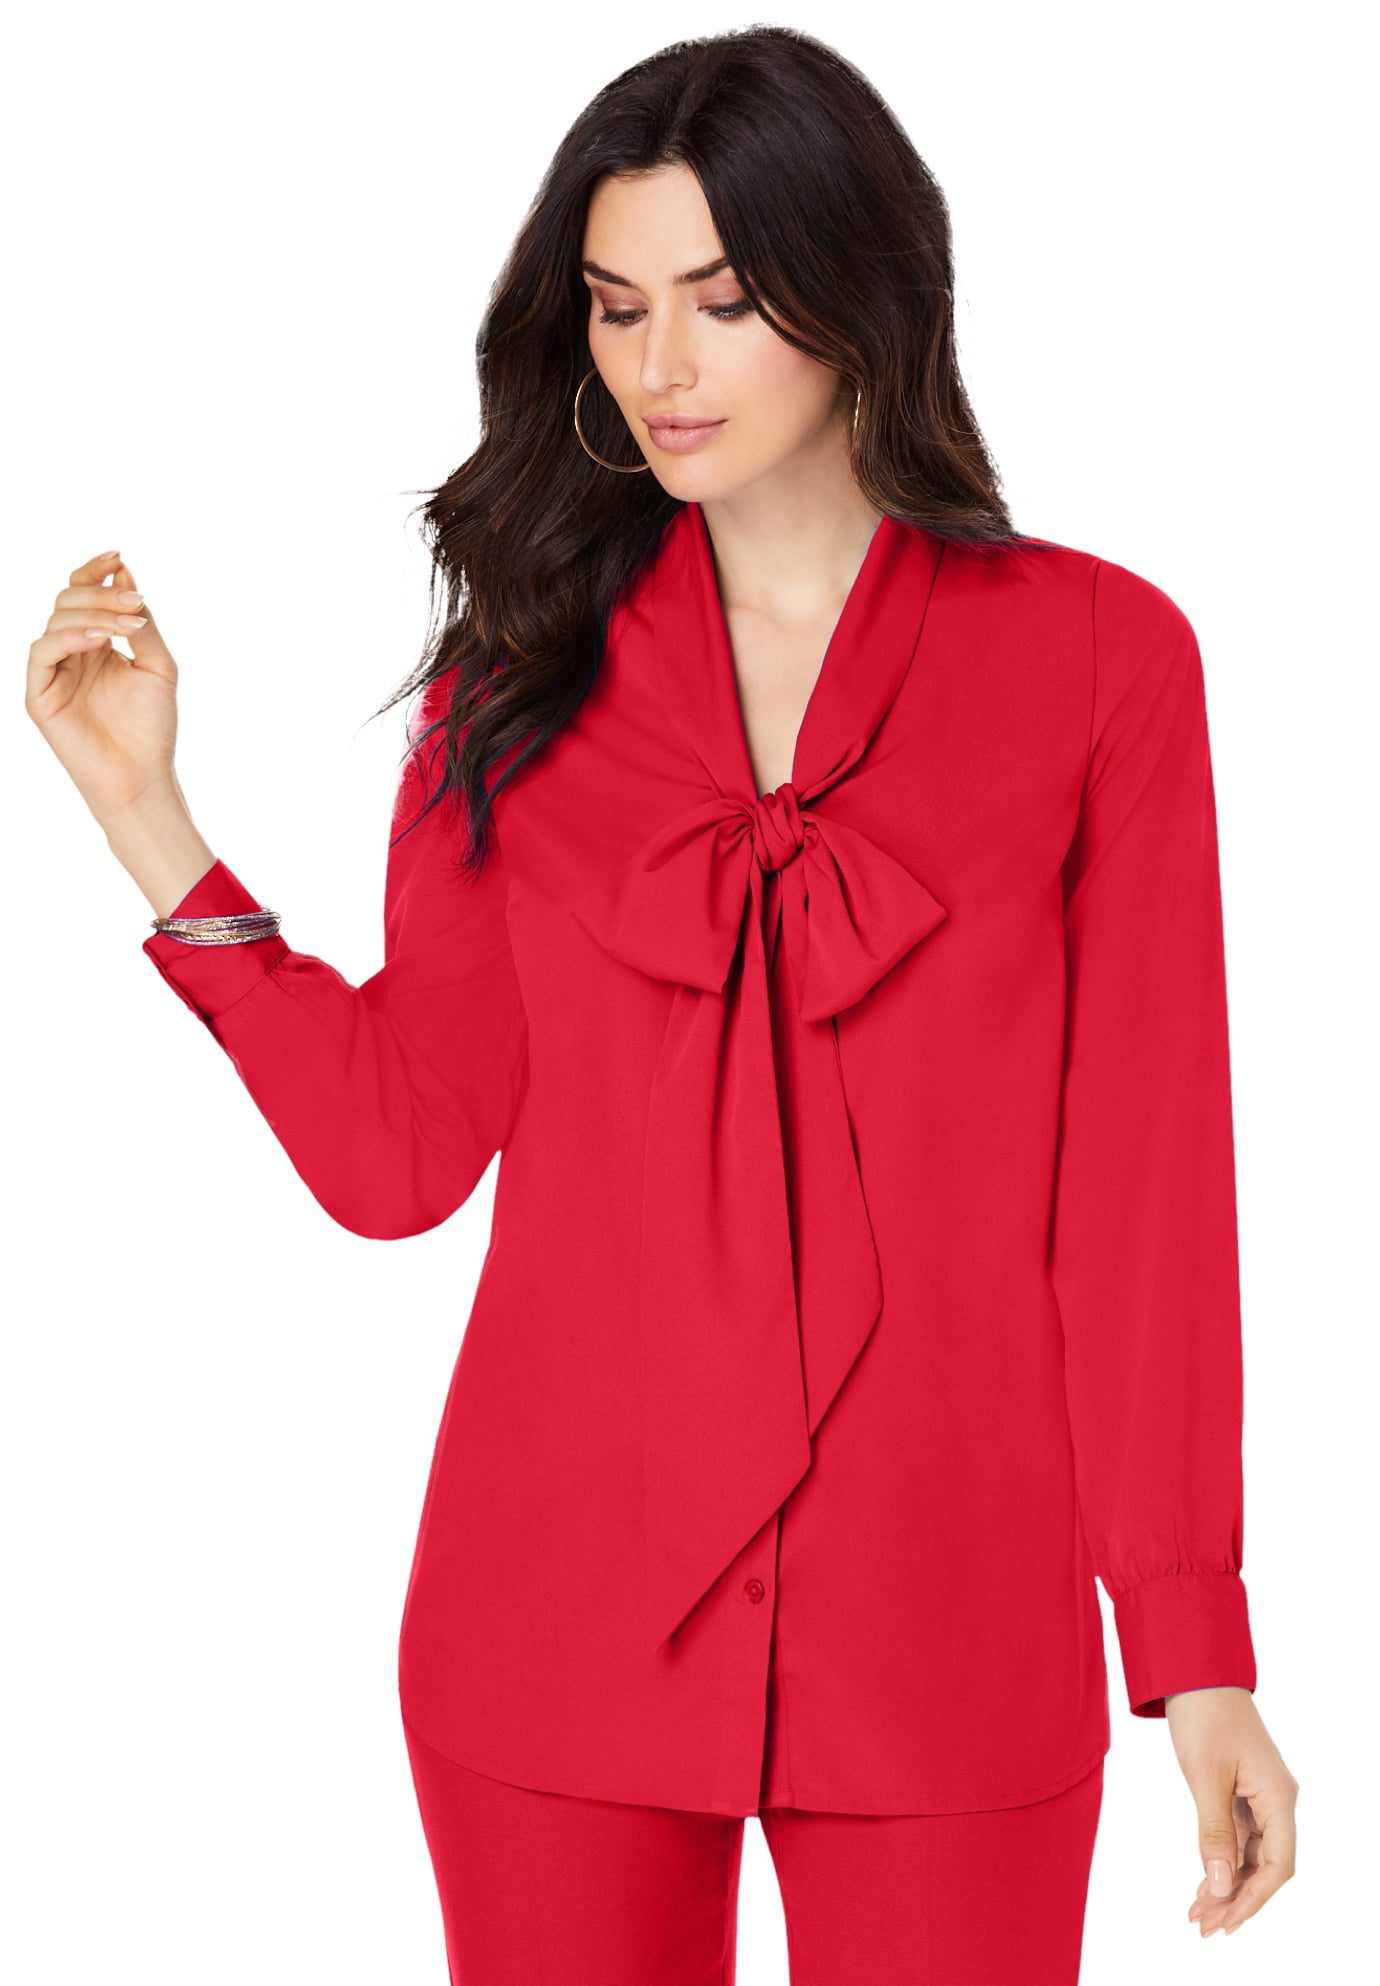 dans Eksklusiv Brobrygge Roaman's Women's Plus Size Long Sleeve Bow Blouse - 14 W, Vivid Red -  Walmart.com